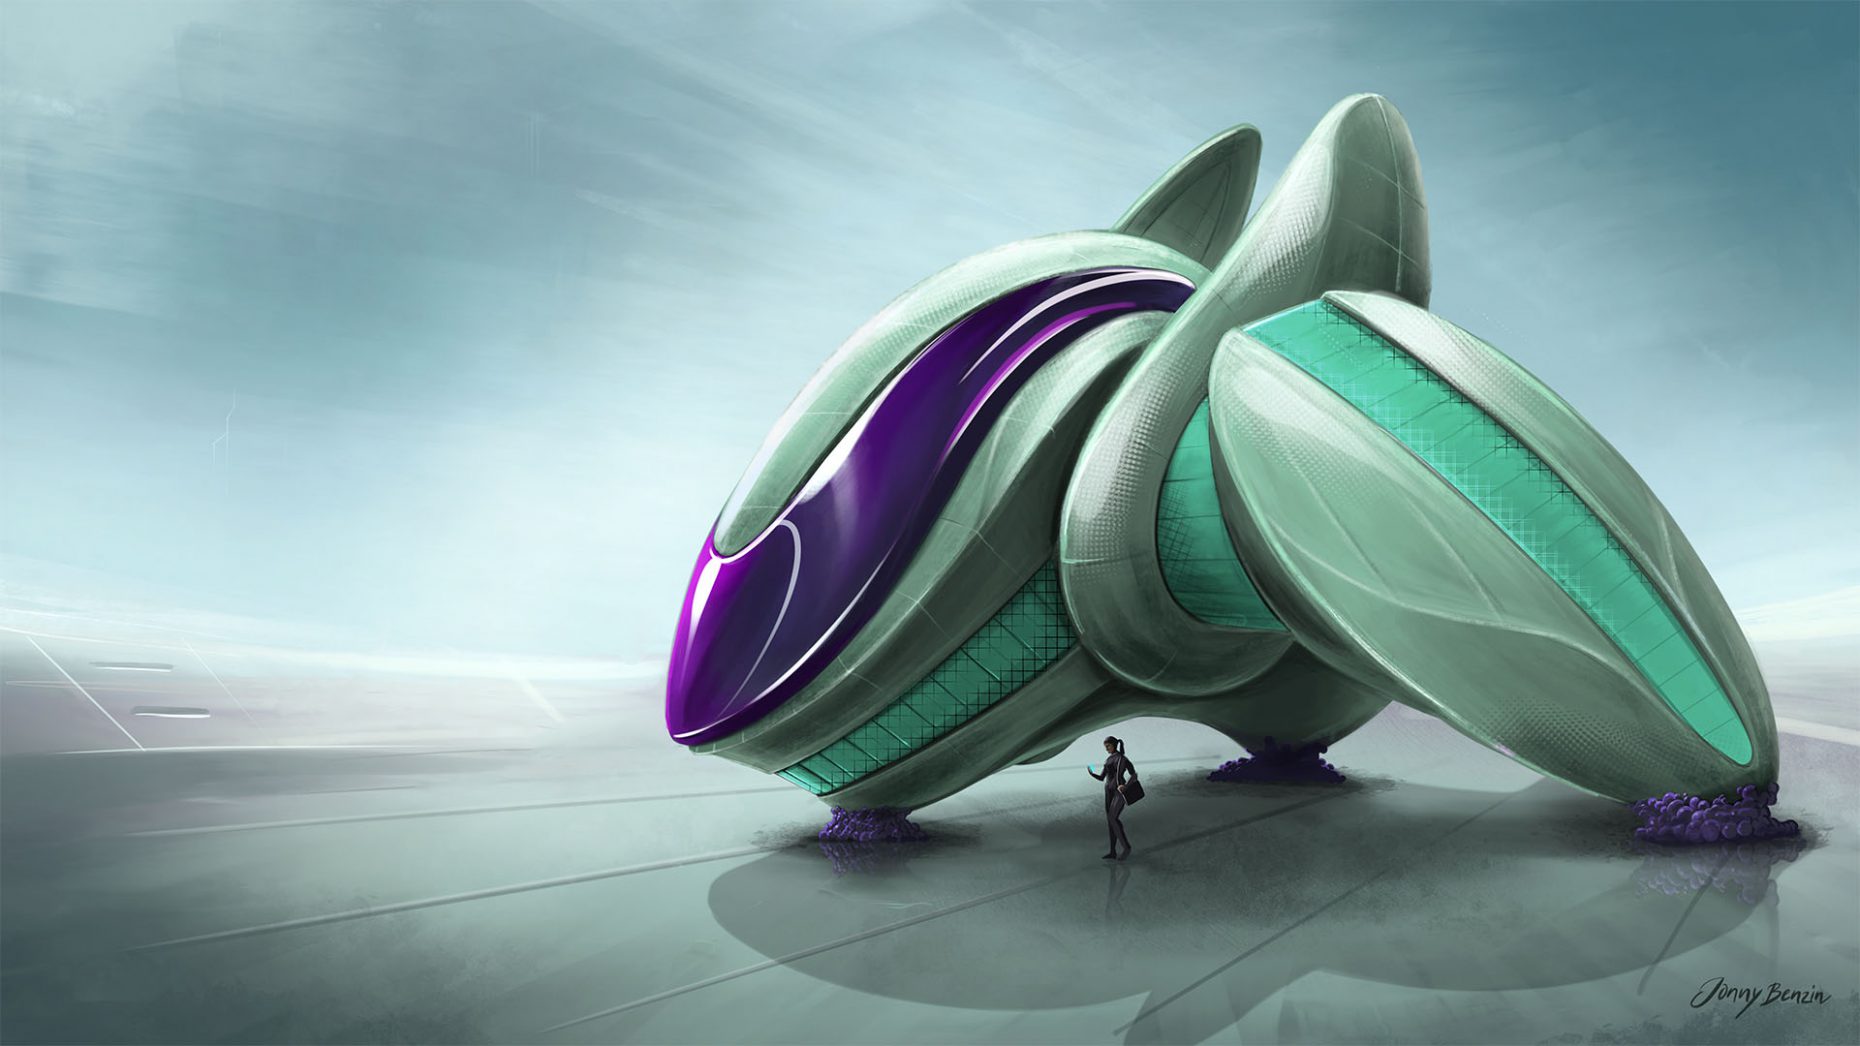 SpaceShip_07 by Jonny Benzin